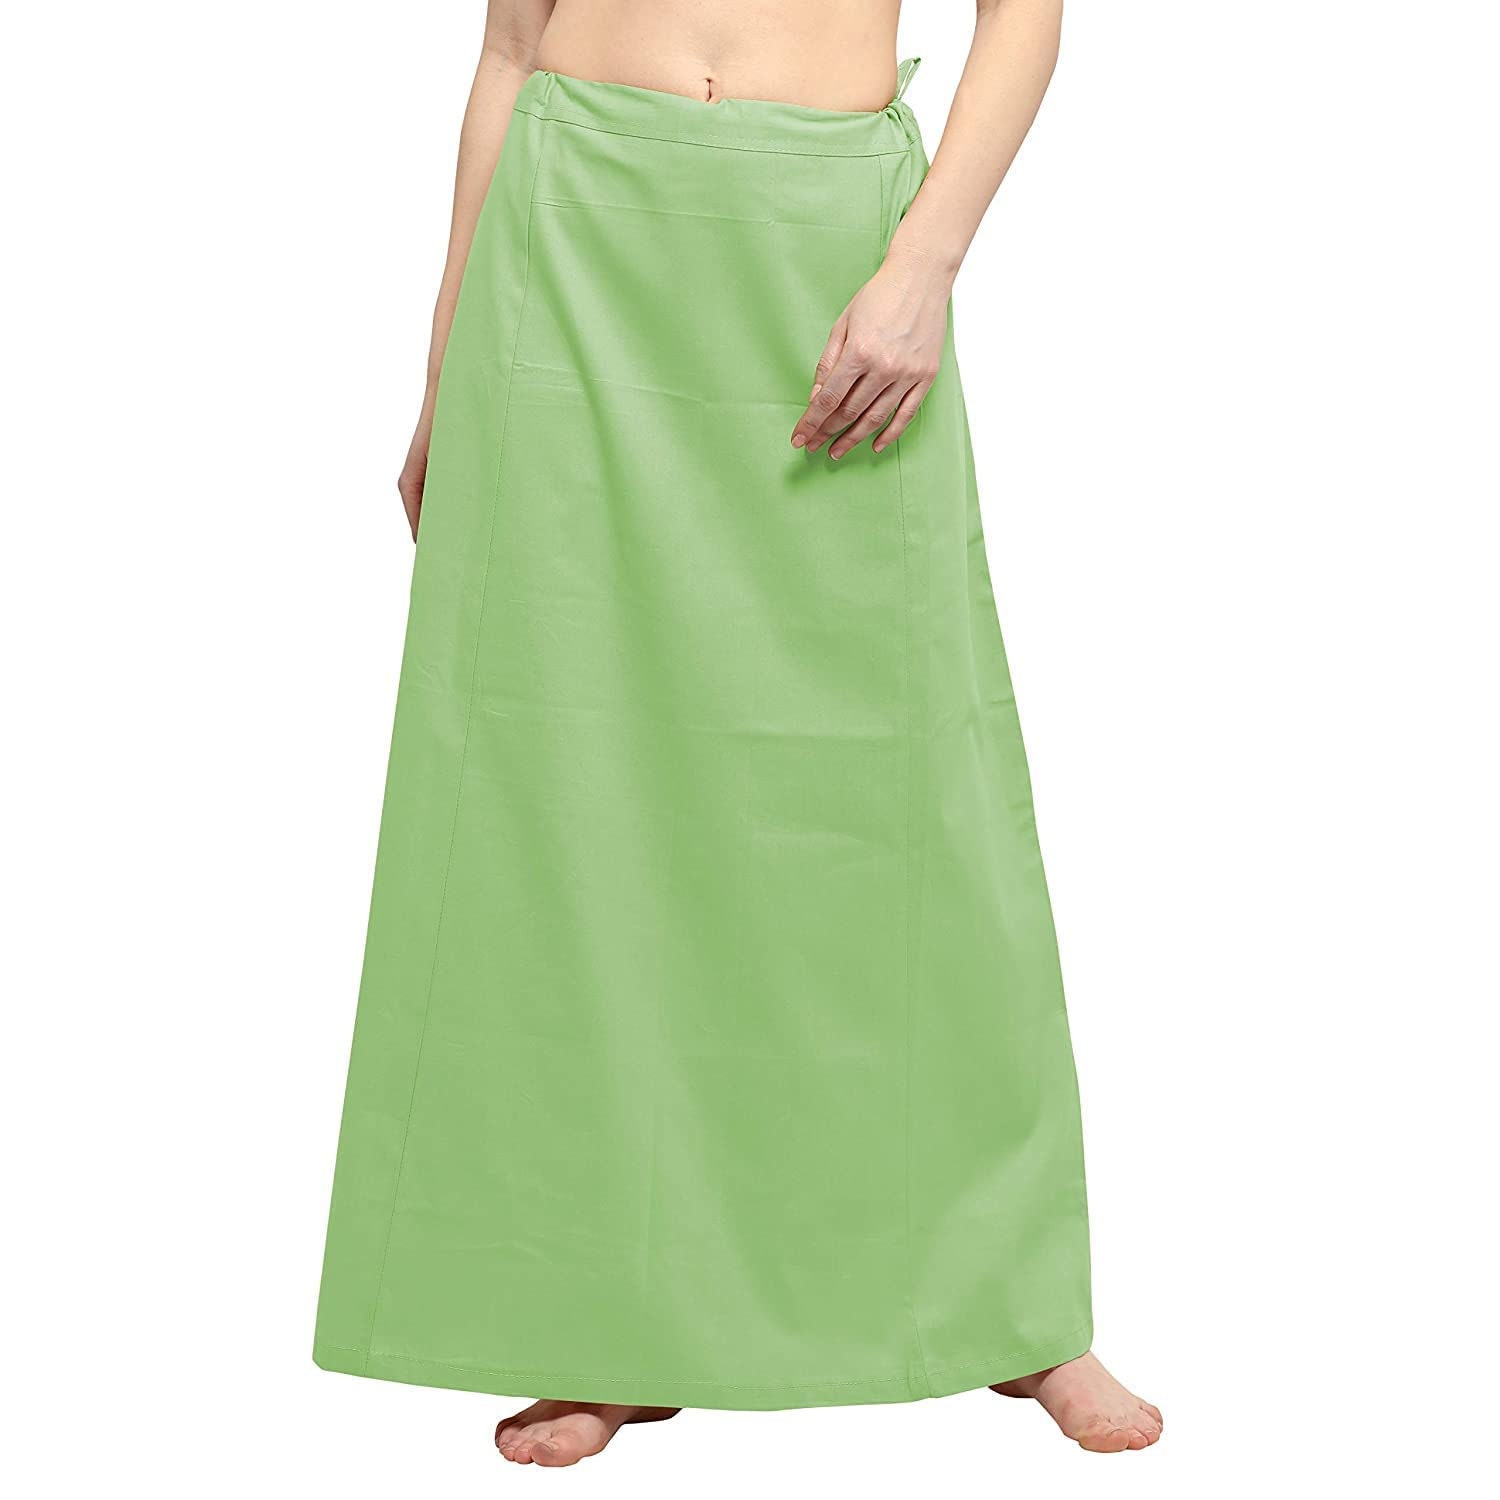 Petticoat With Drawstring for Women, Pista Green Women Cotton